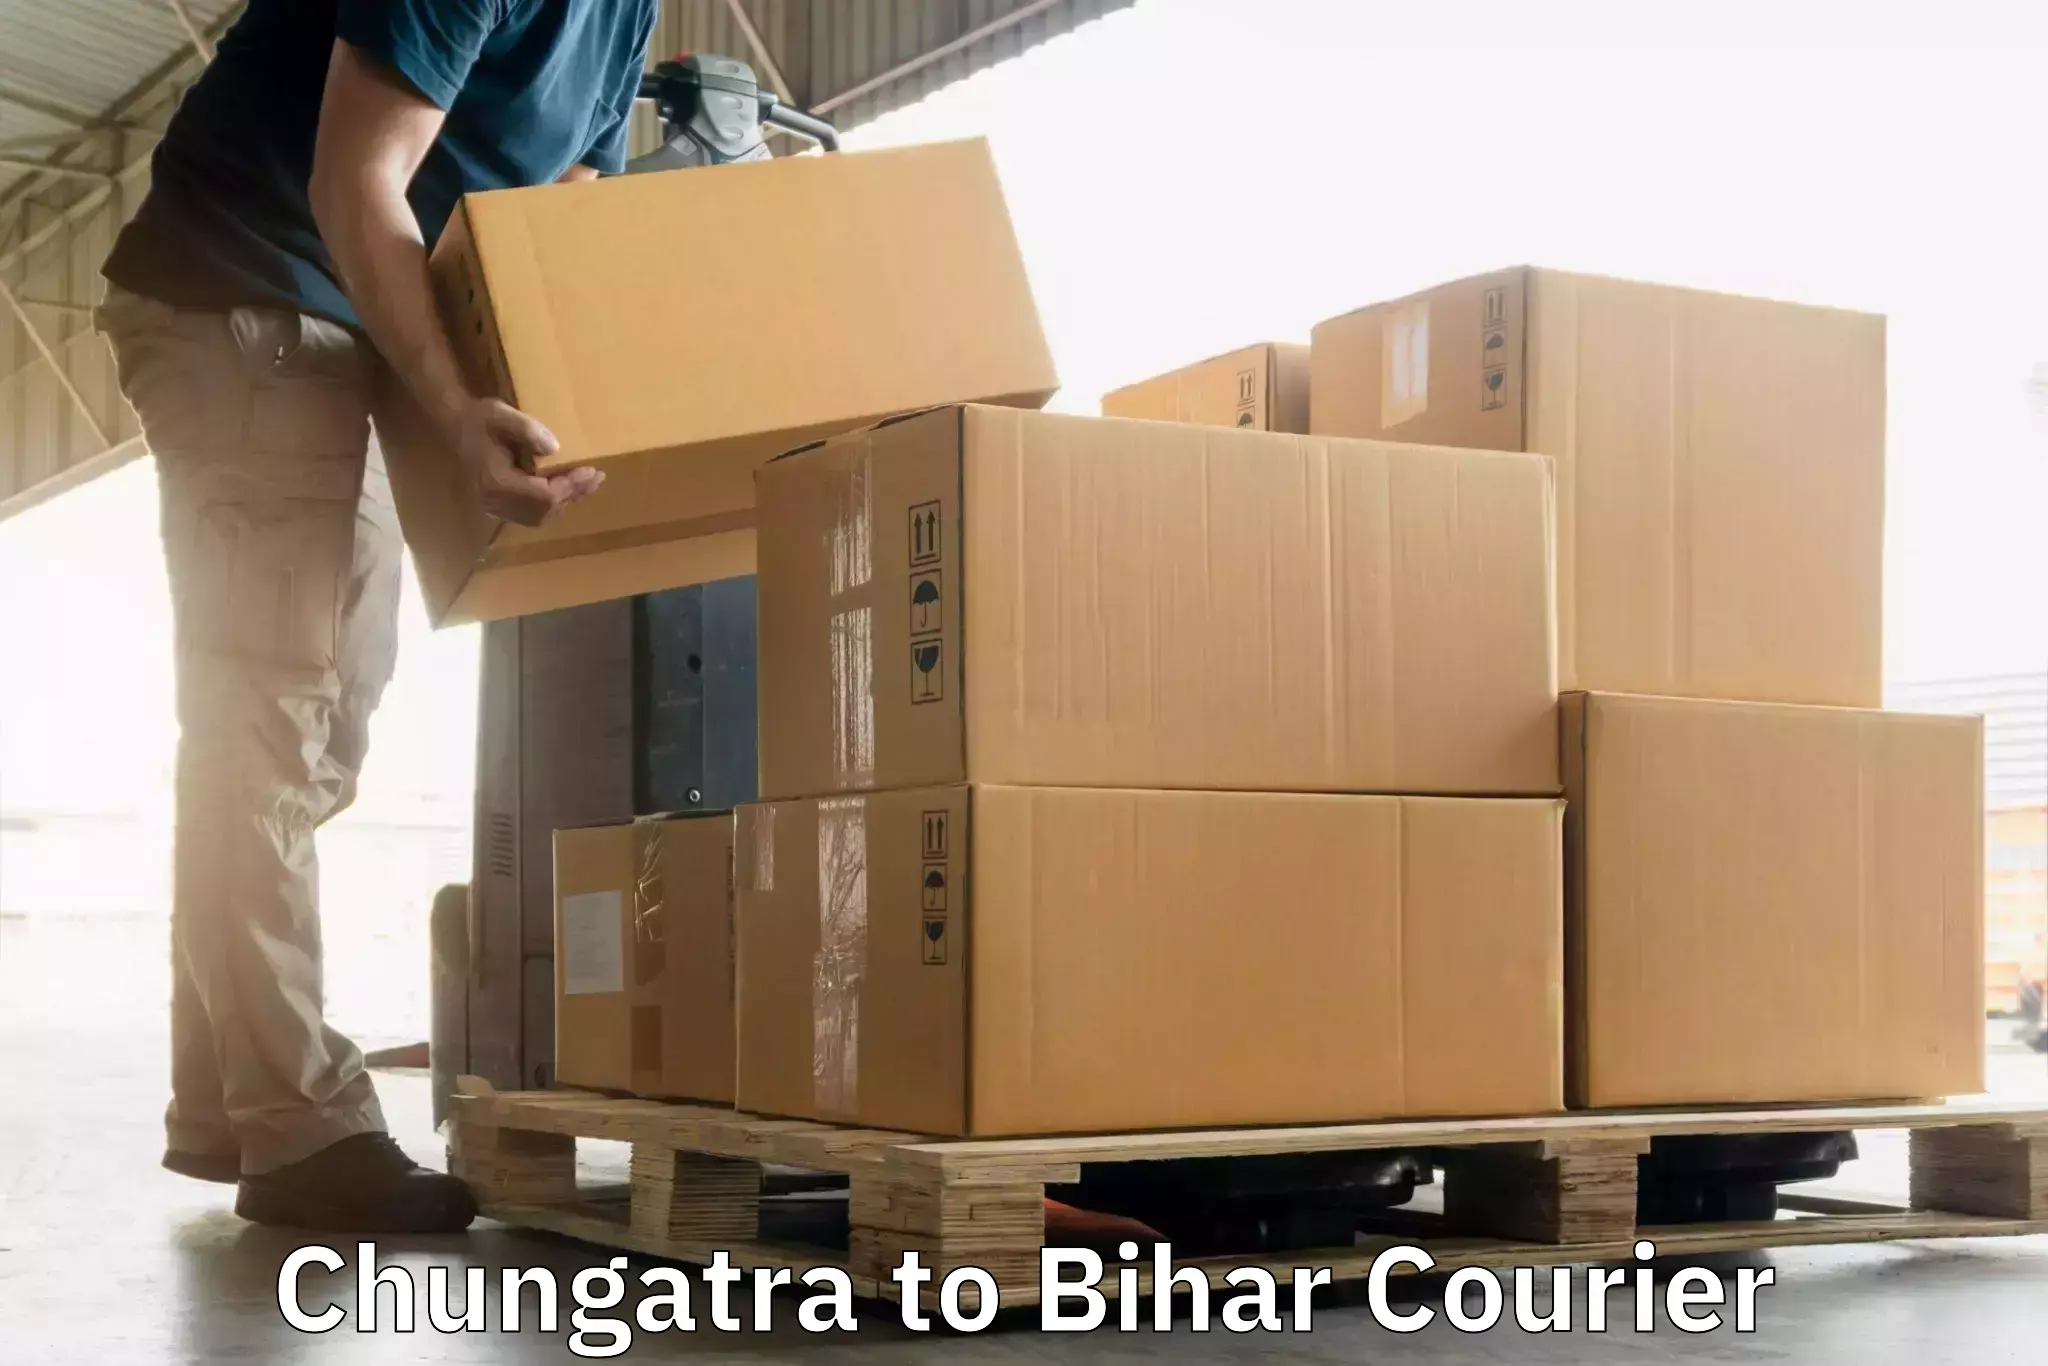 Multi-national courier services Chungatra to Darbhanga